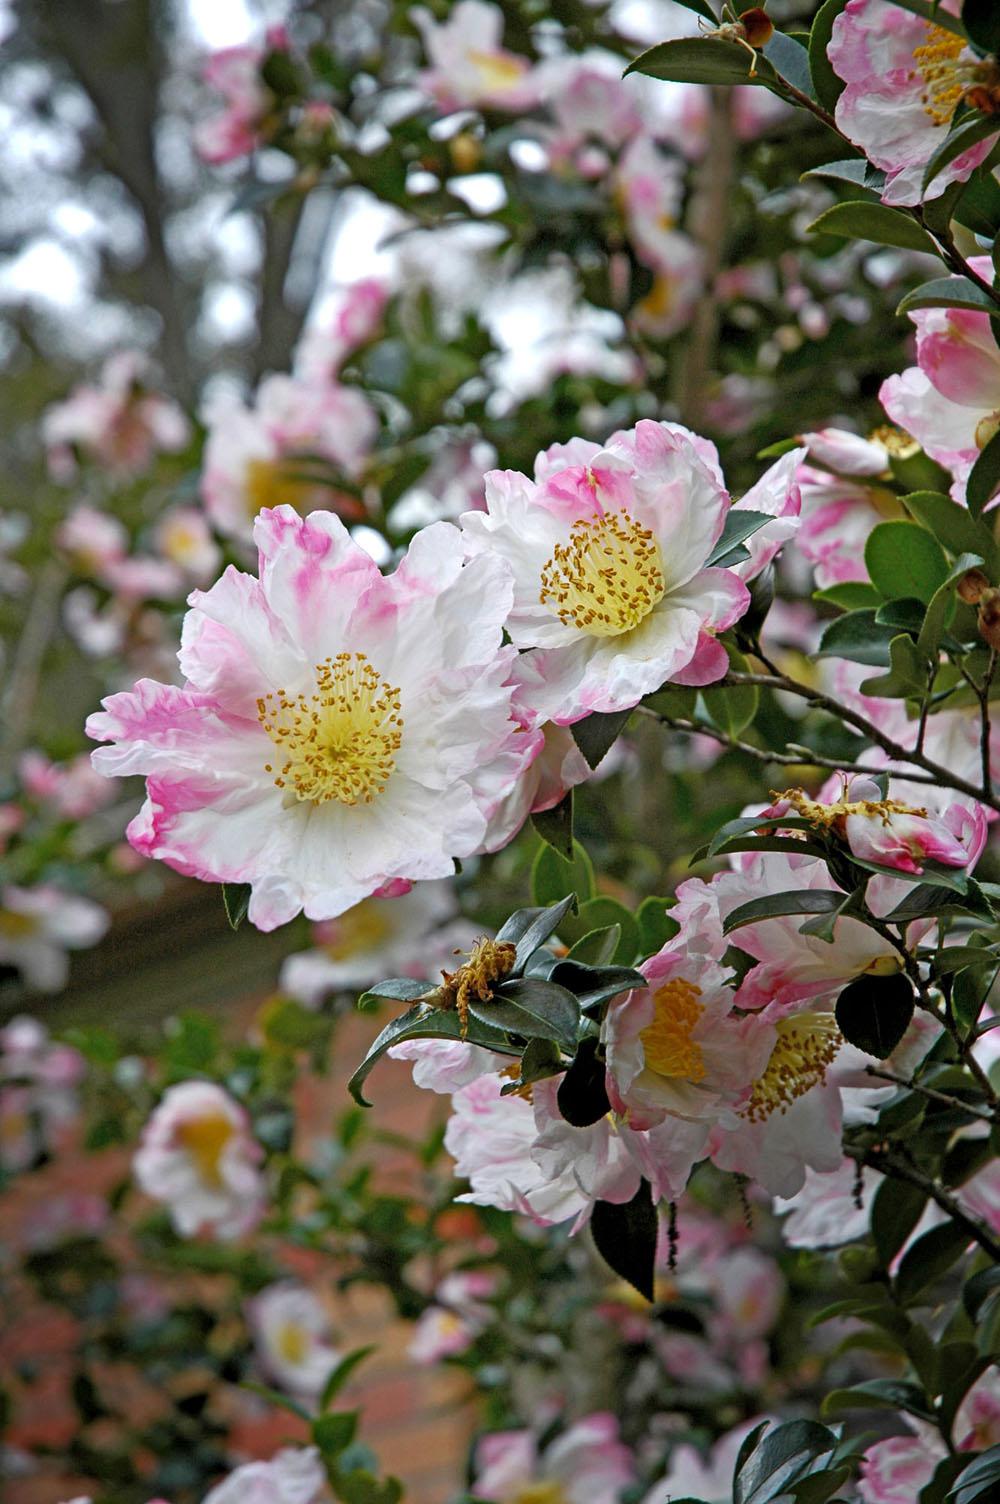 Mississippi's camellias deserve extra attention